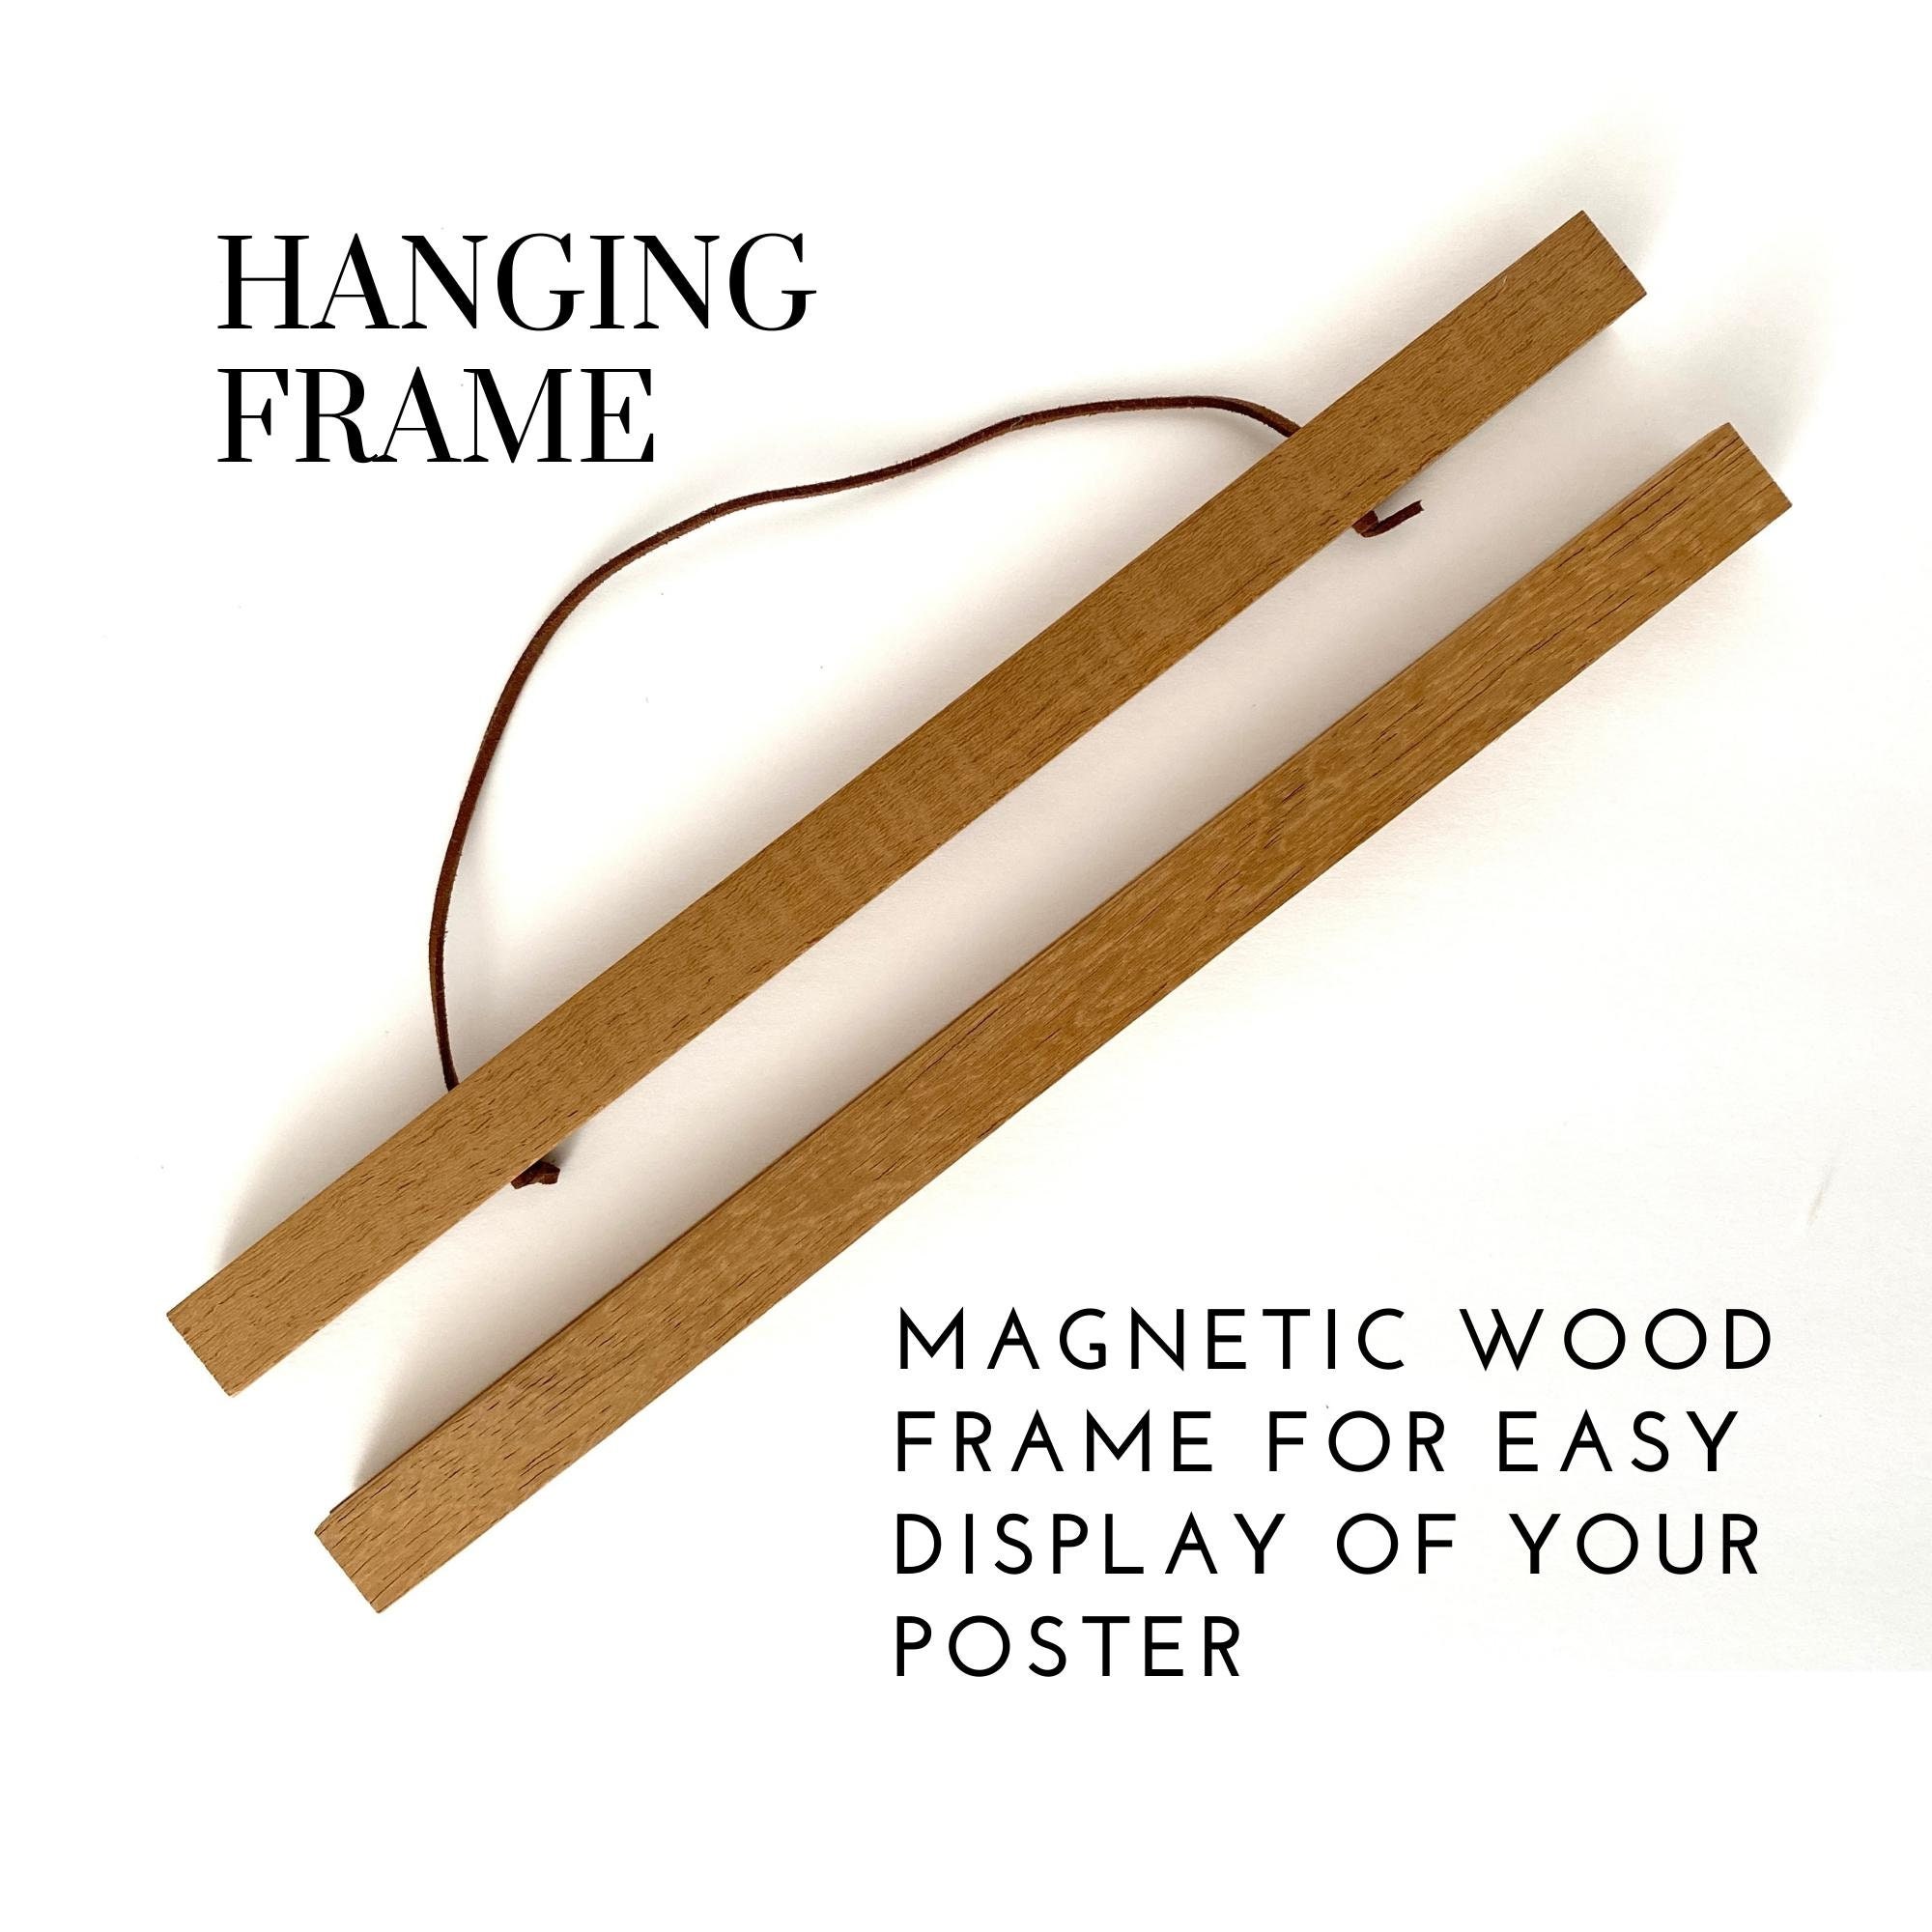 Wooden Poster Frame Madeira in DIN formats